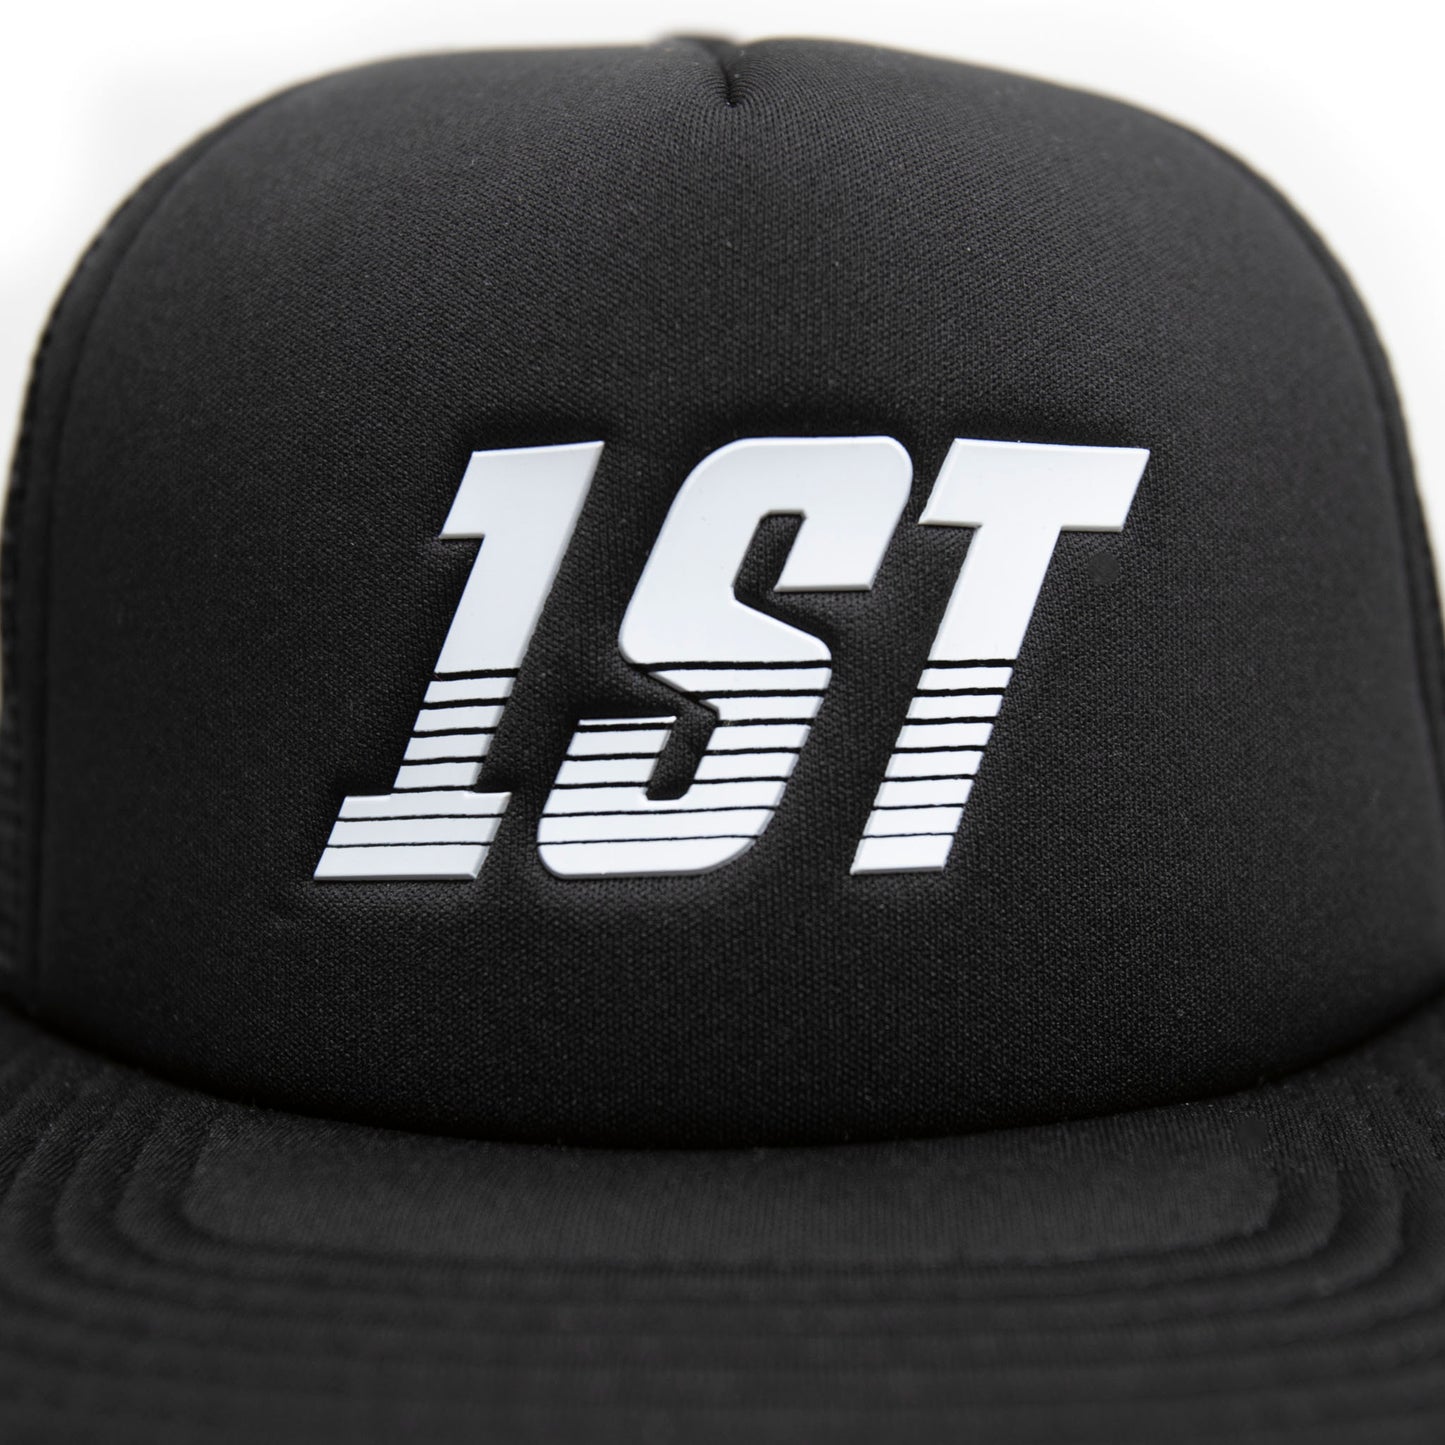 1ST "Striped" Trucker Hat